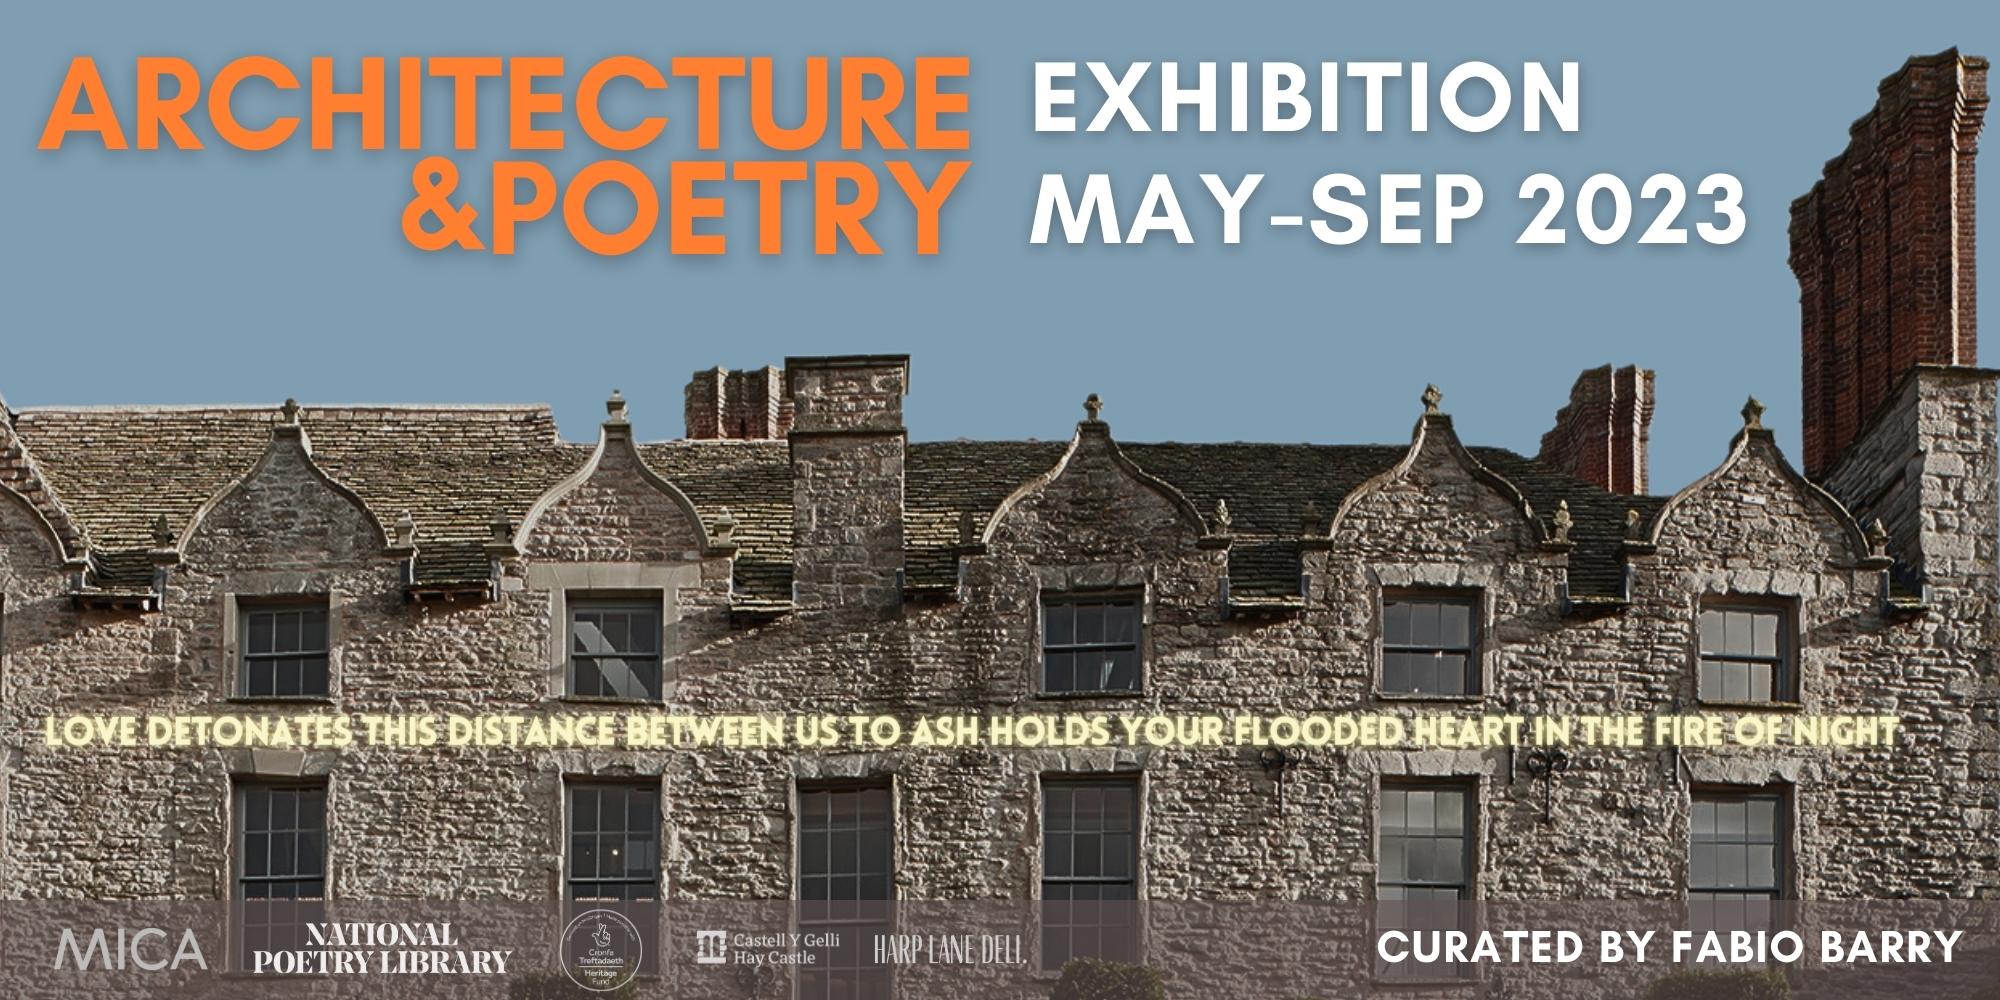 Architecture & Poetry Exhibition